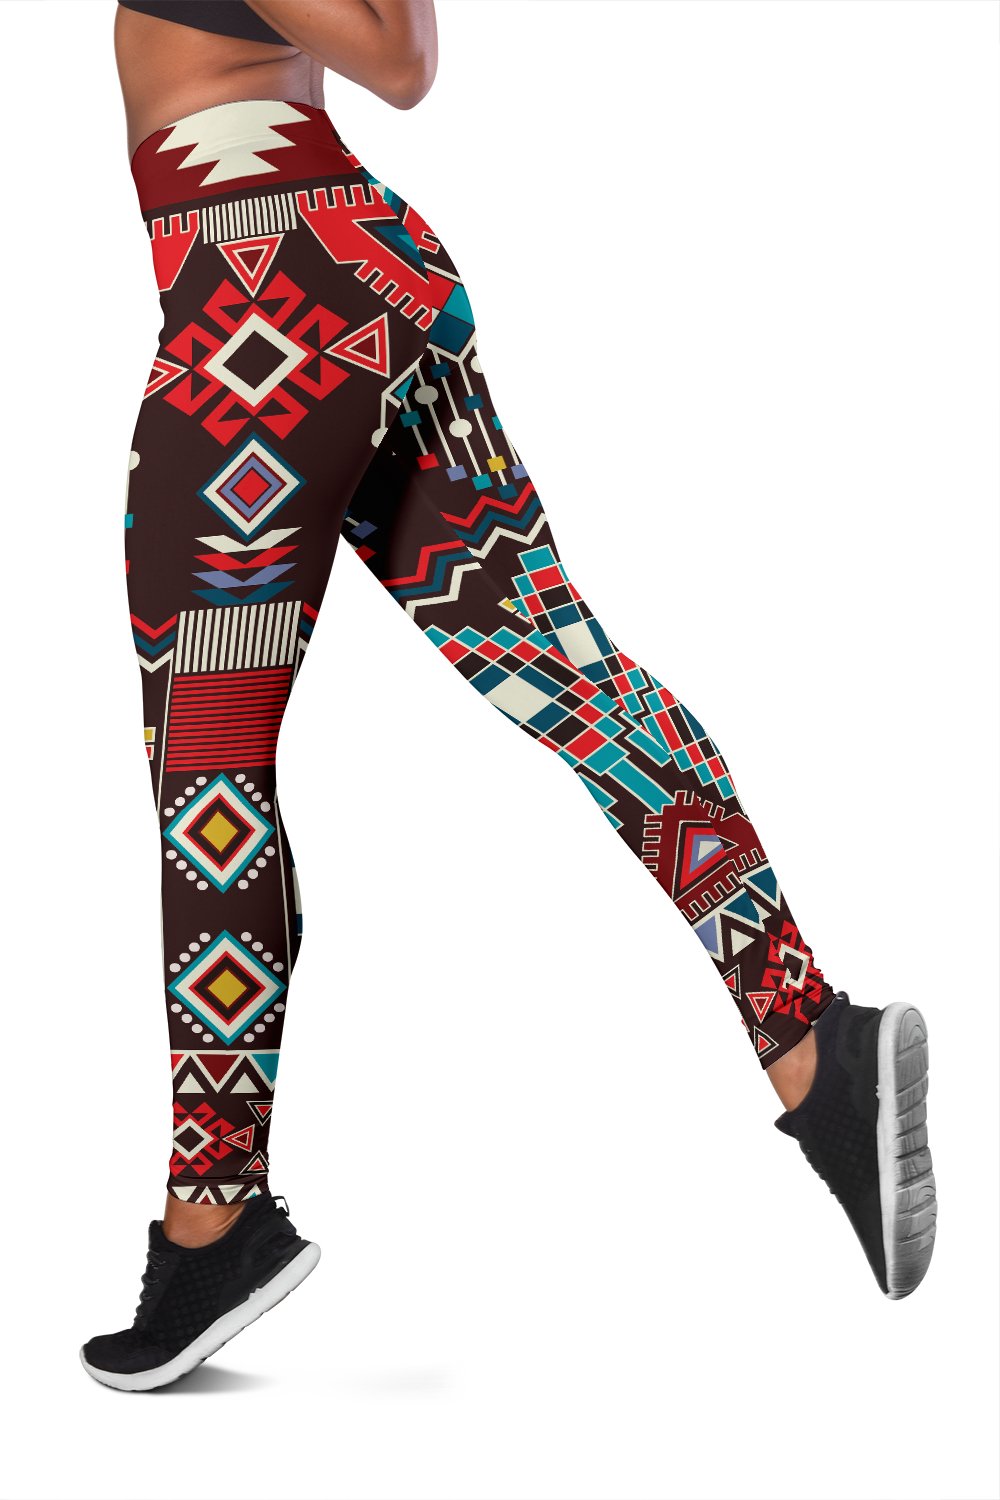 Women Tribal Style Printed Leggings High Waisted Yoga Pants Pockets for  Women